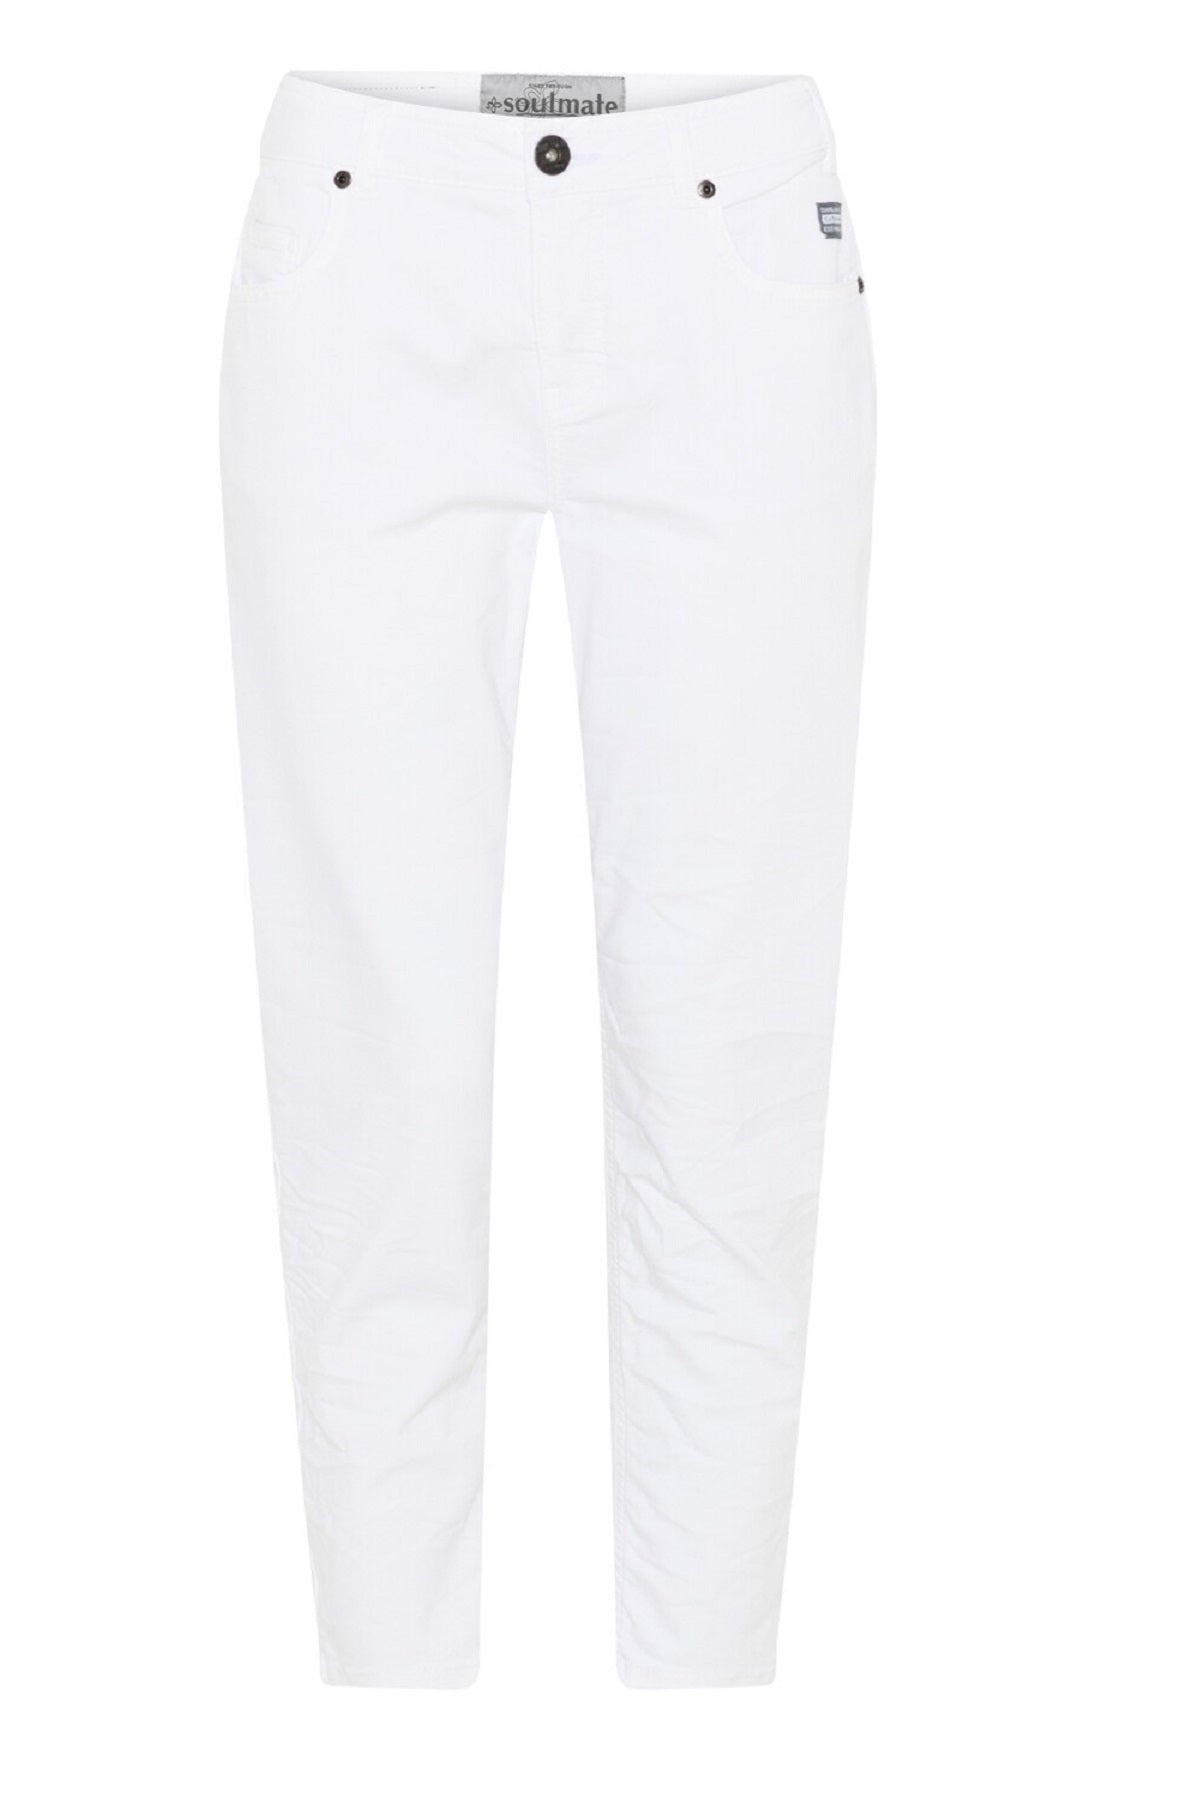 Soulmate Junica 8 Pants, White